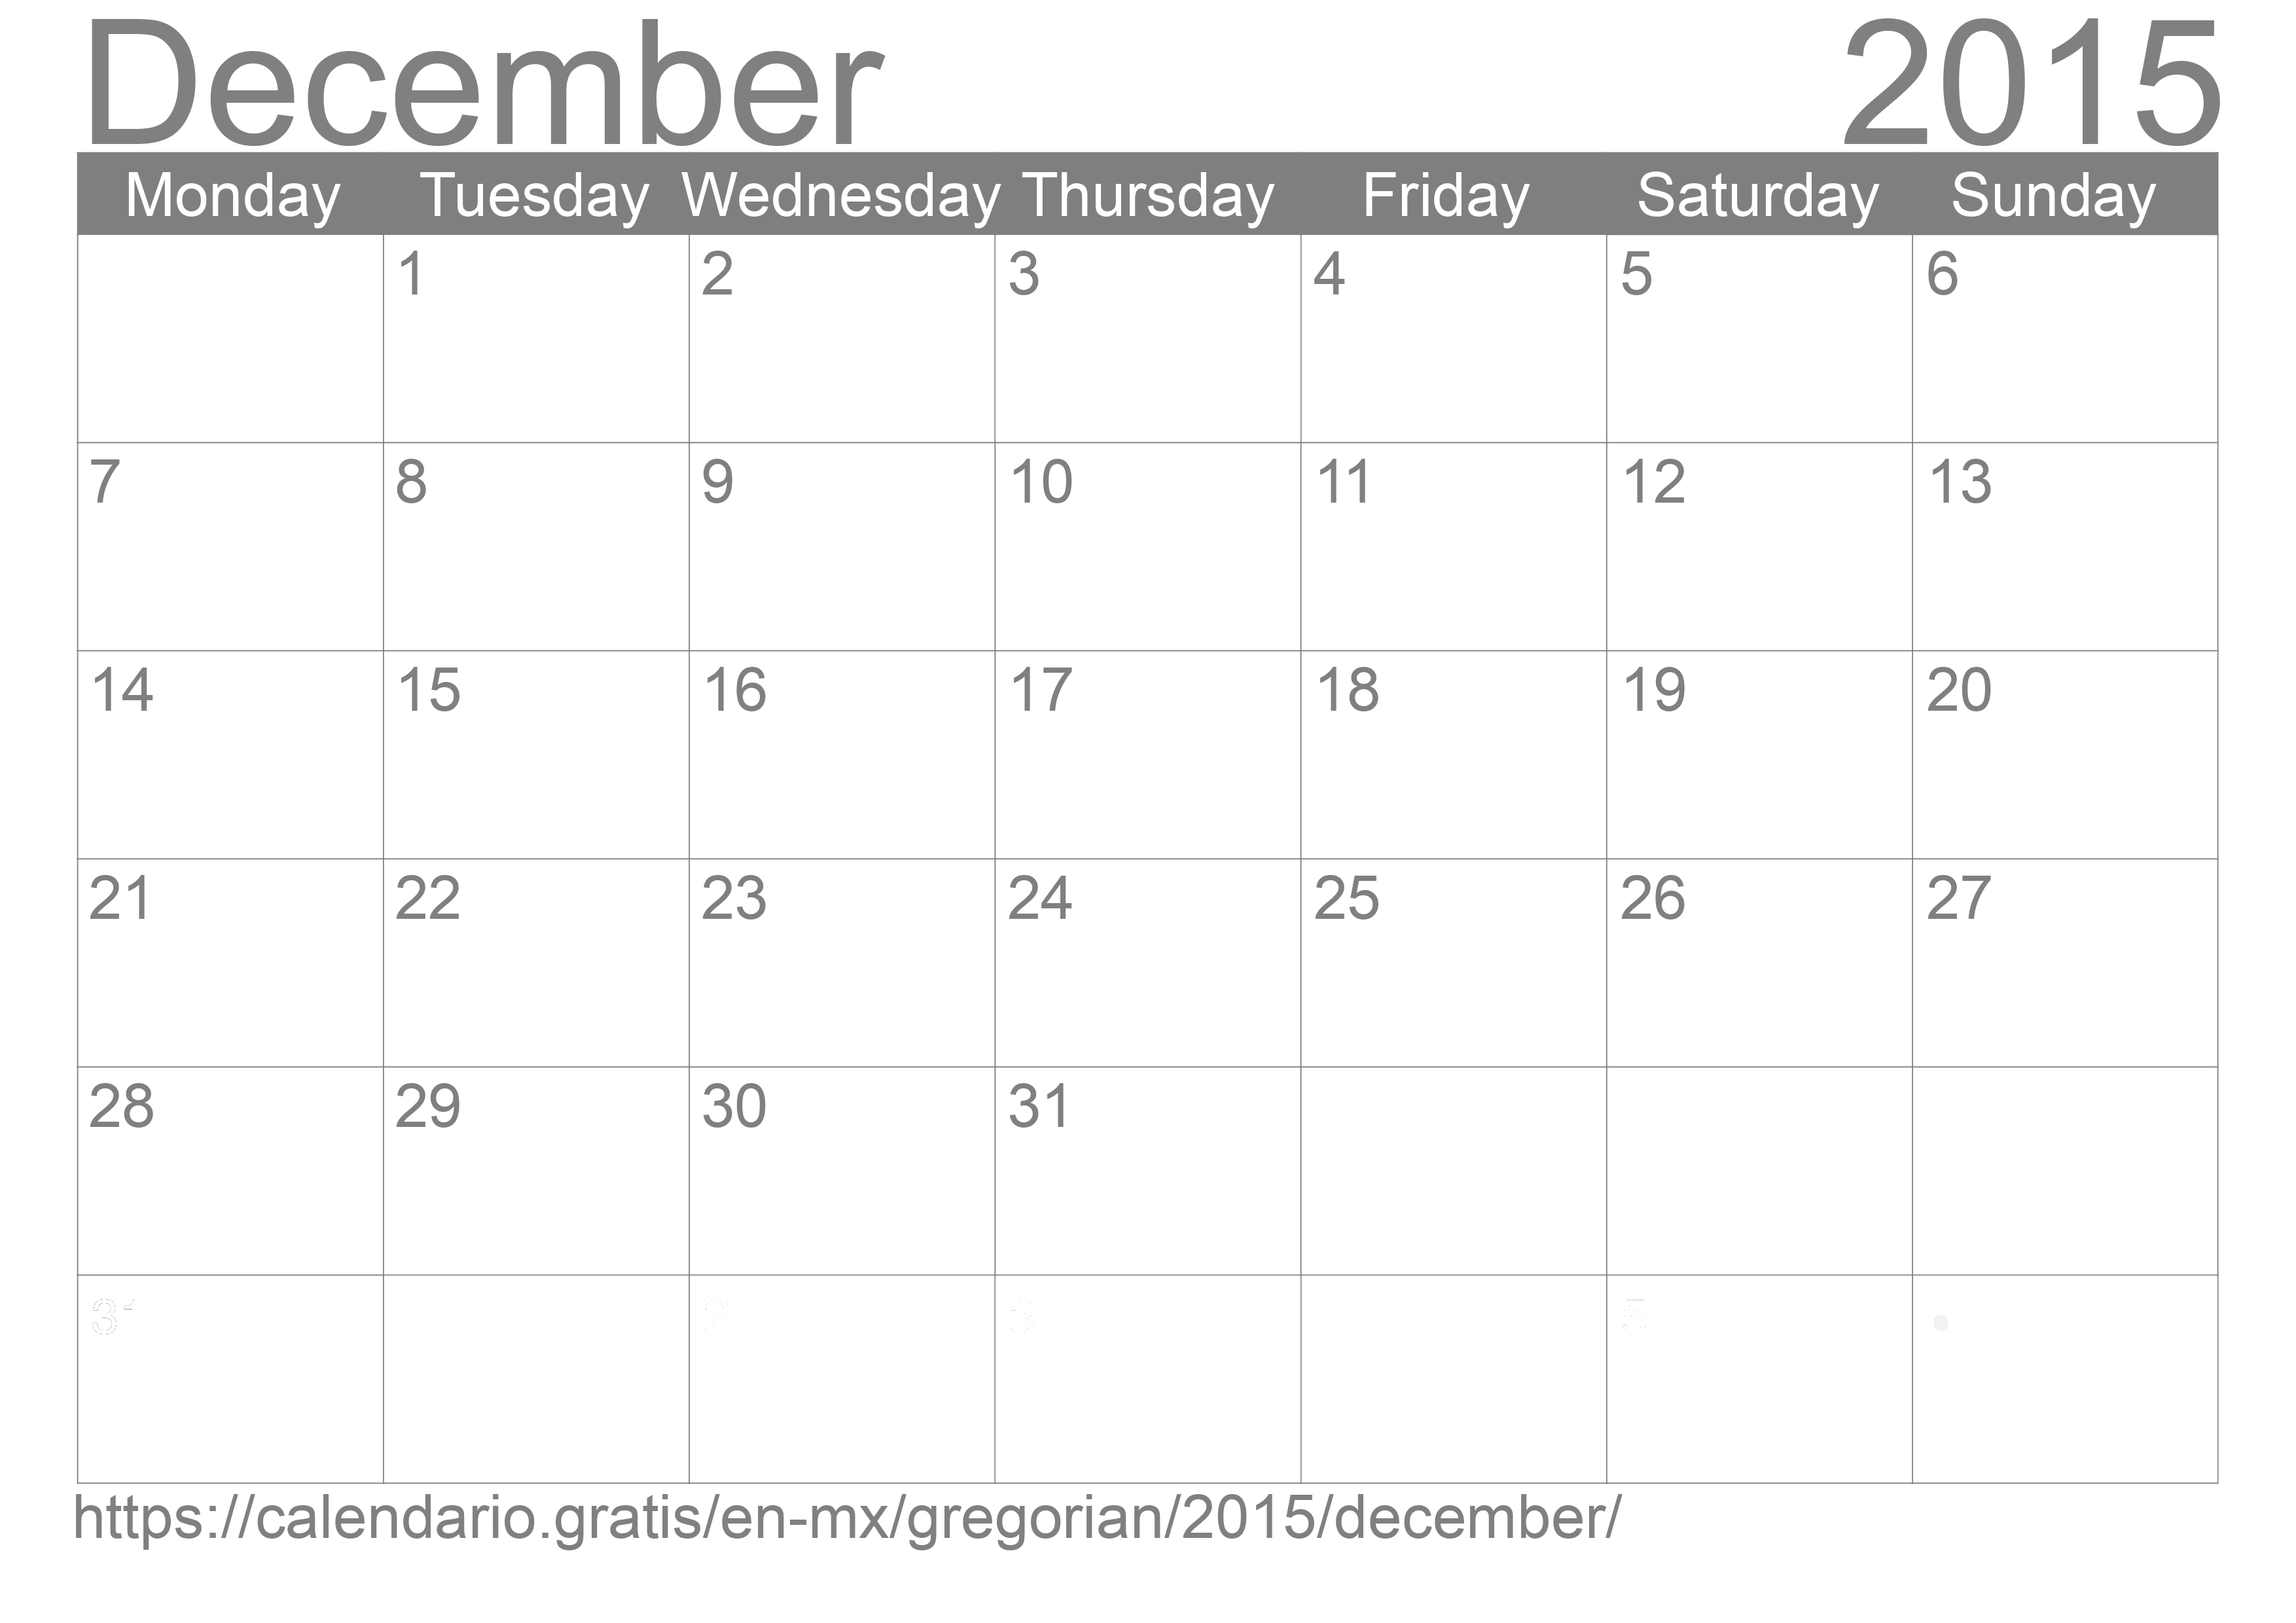 Calendar December 2015 to print